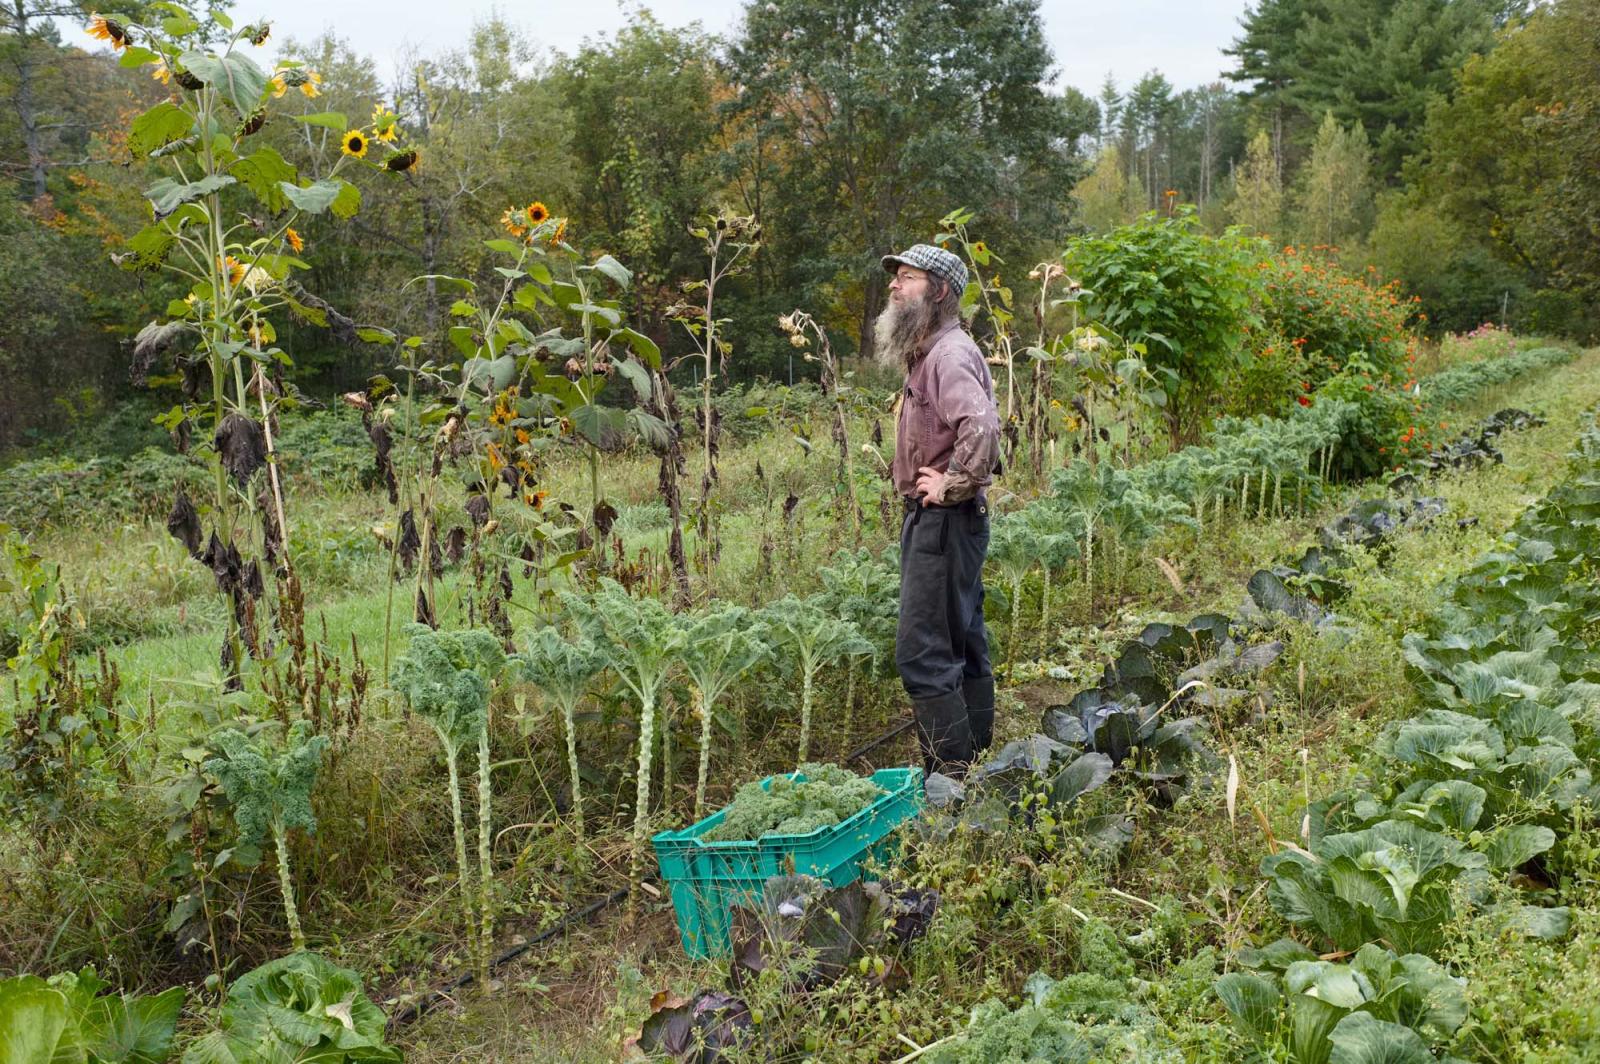 Farming for the Neighbors - Farmer Frank harvests kale.  Westmoreland, New Hampshire, USA. September 2021.